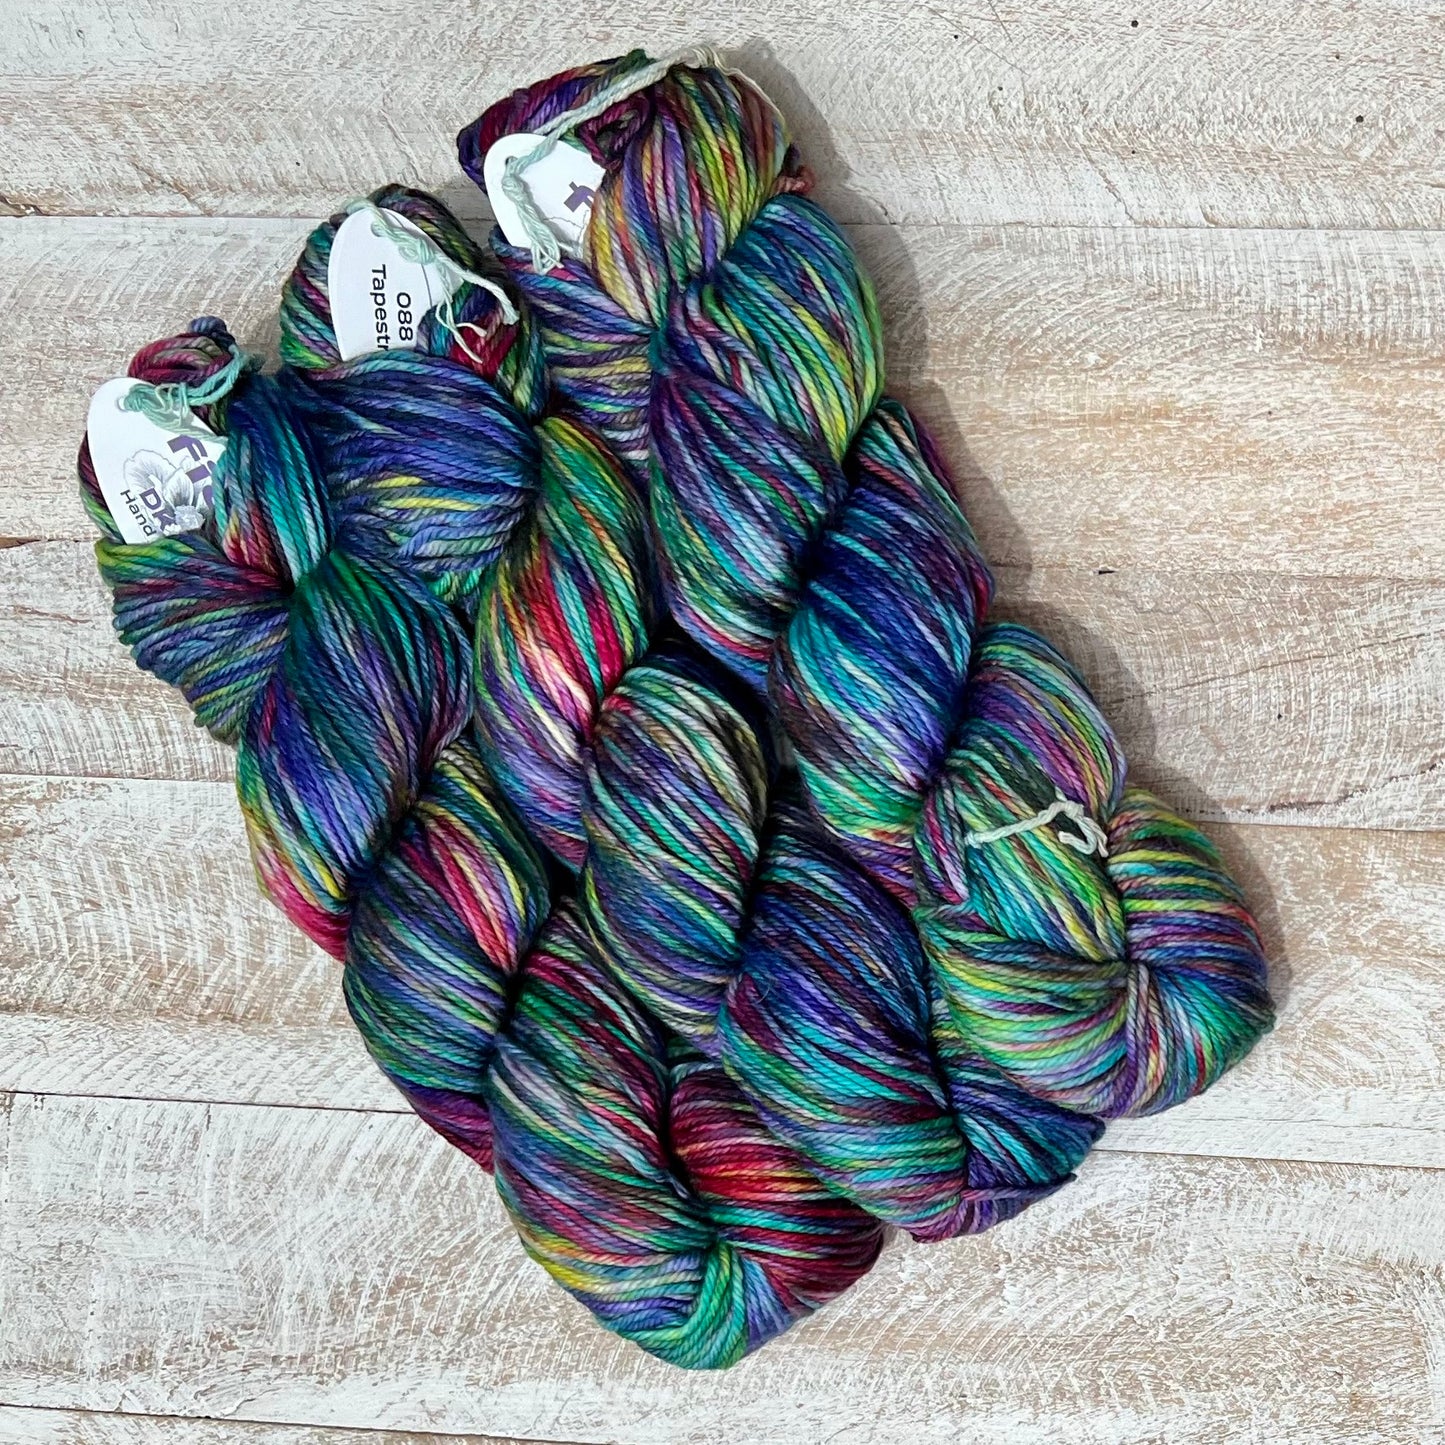 Fiori DK Hand Dyed Yarn